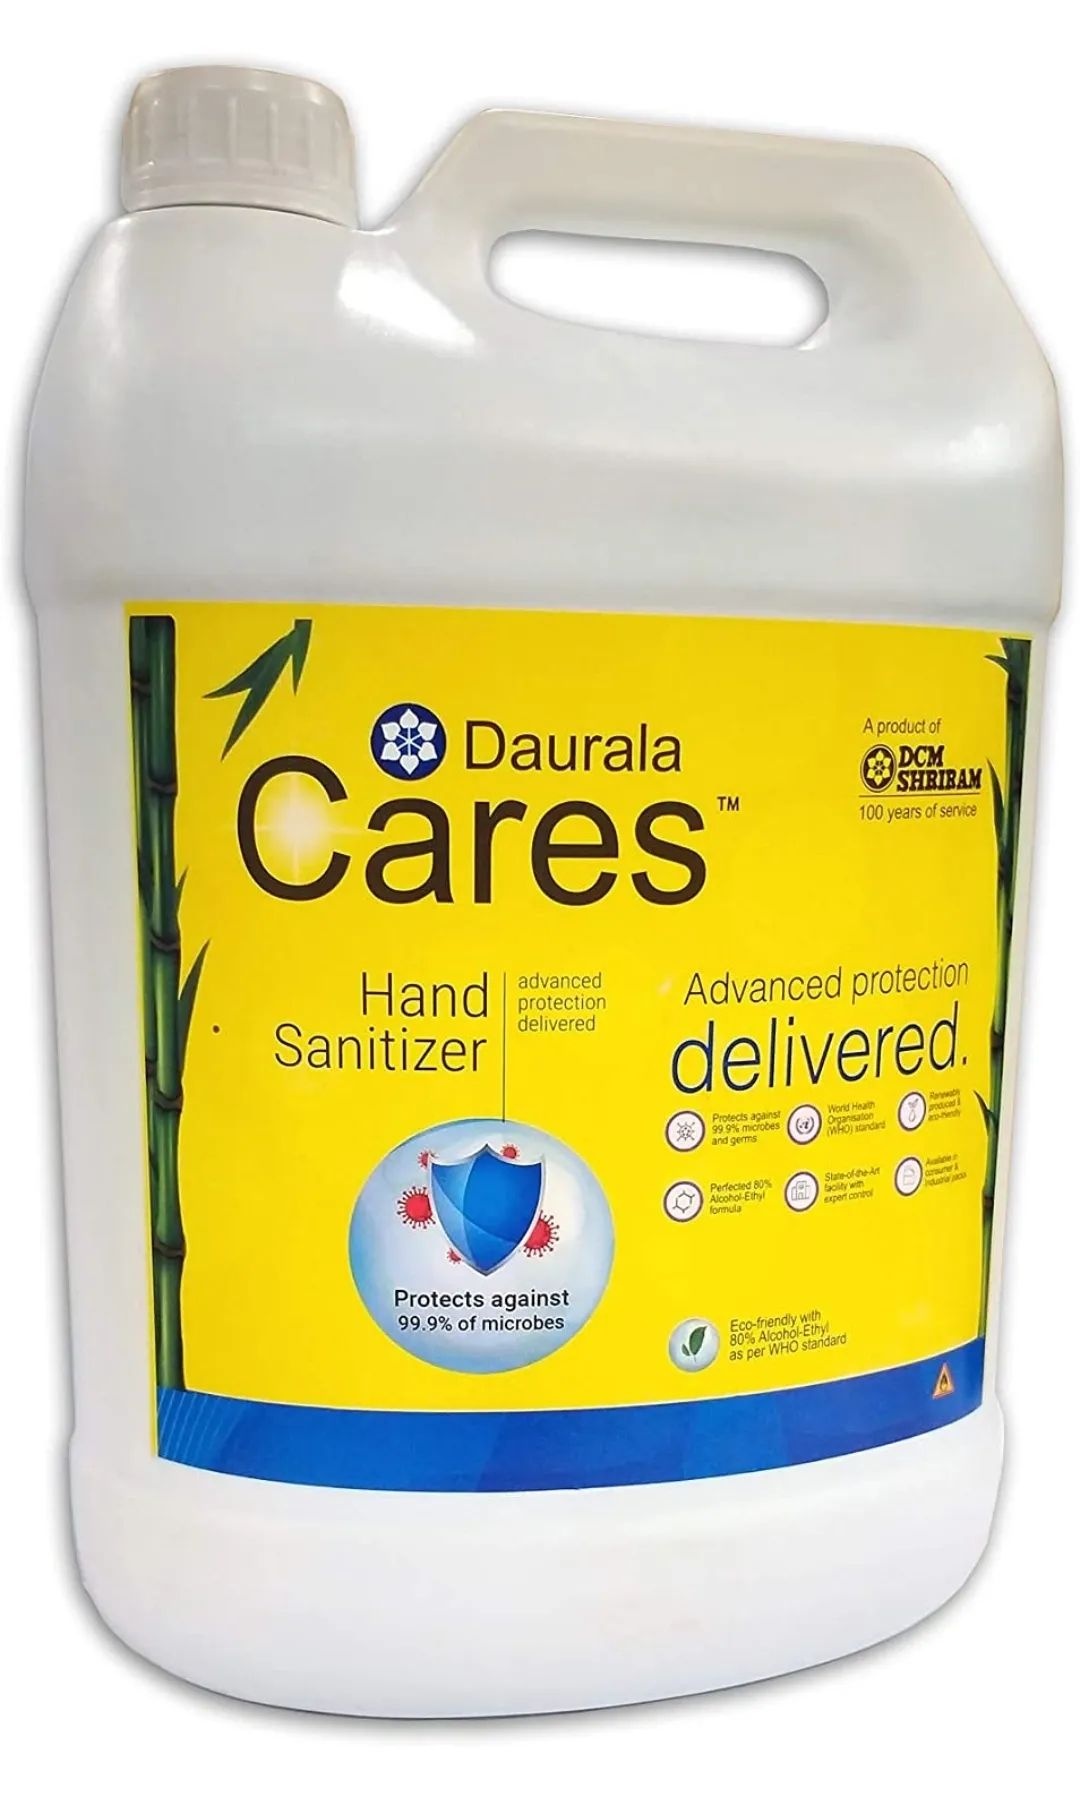 Daurala Cares Hand Sanitizer, Advanced Protection, 5 Liter, 80% Alcohol-Ethyl WHO Standard